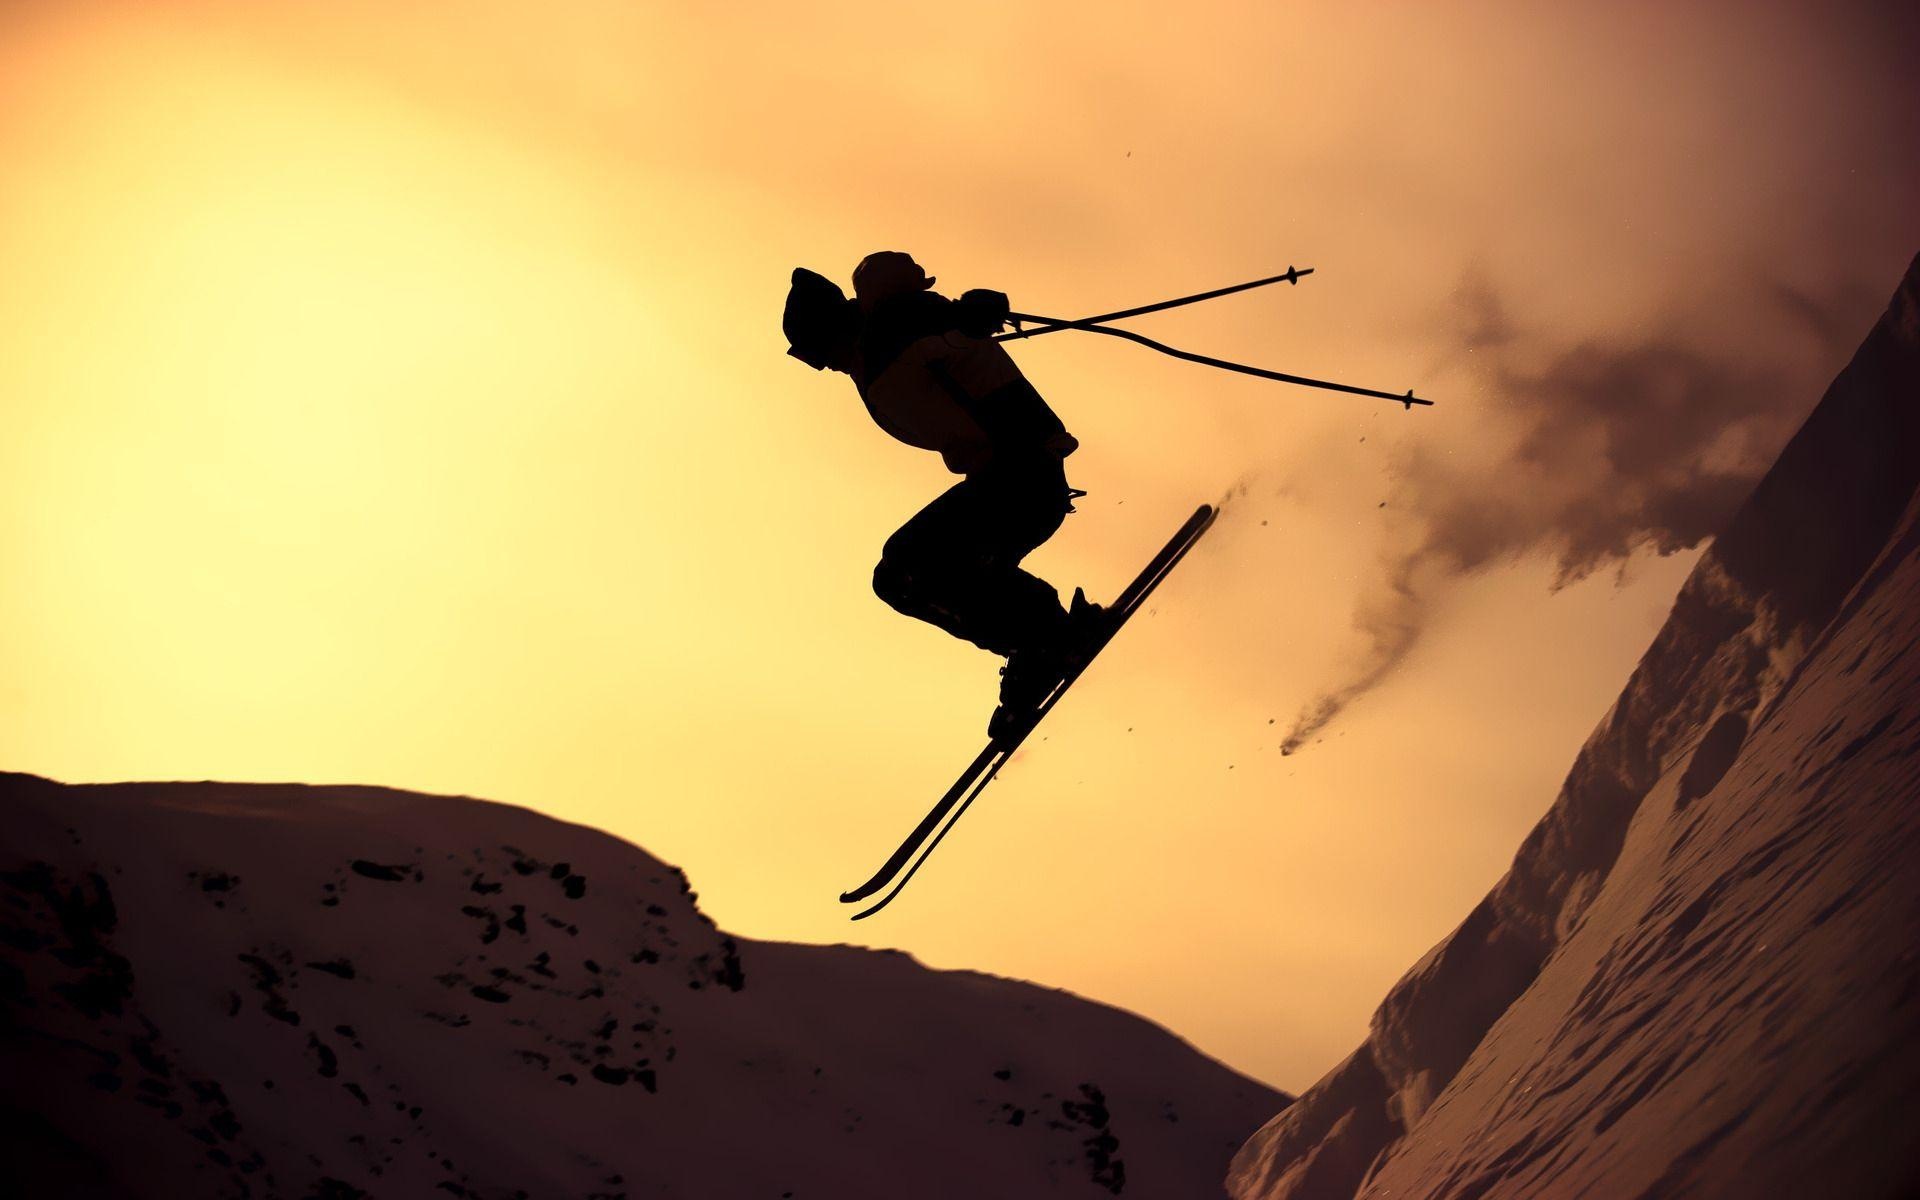 Skiing: Freestyle Skiing, Downhill, Winter sports, Ski jumping, Extreme sports. 1920x1200 HD Wallpaper.